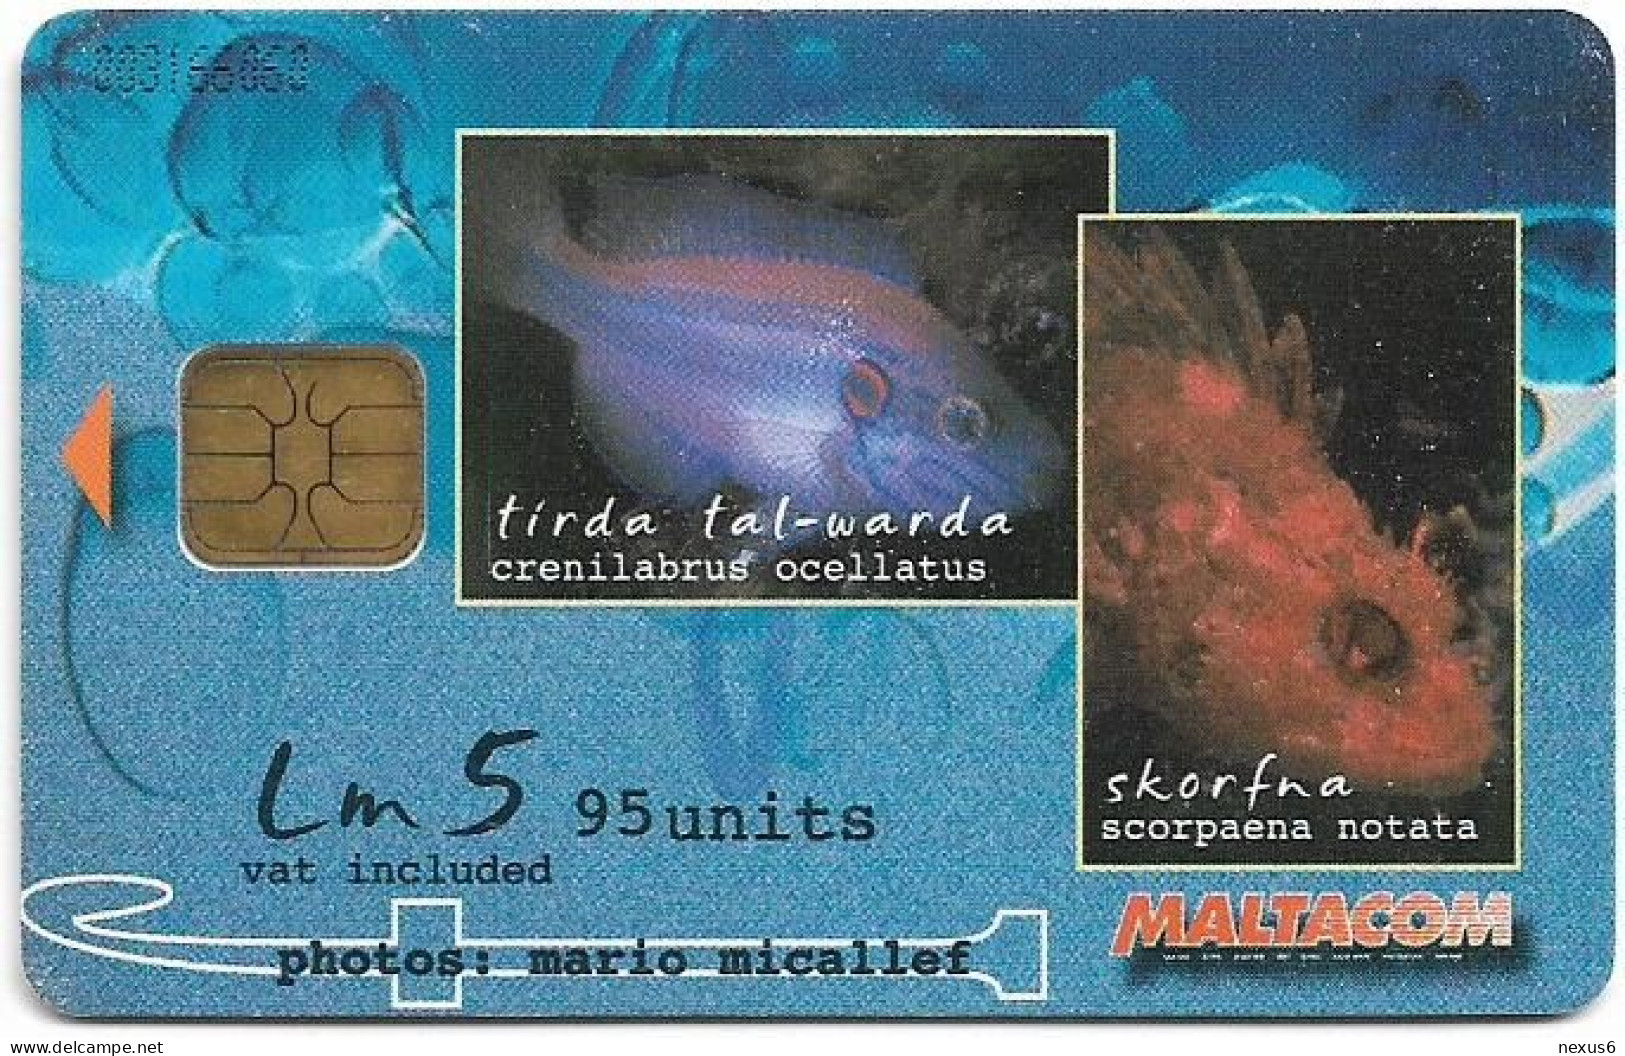 Malta - Maltacom - Fish, Tracna - 05.2002, 95U, 10.000ex, Used - Malta